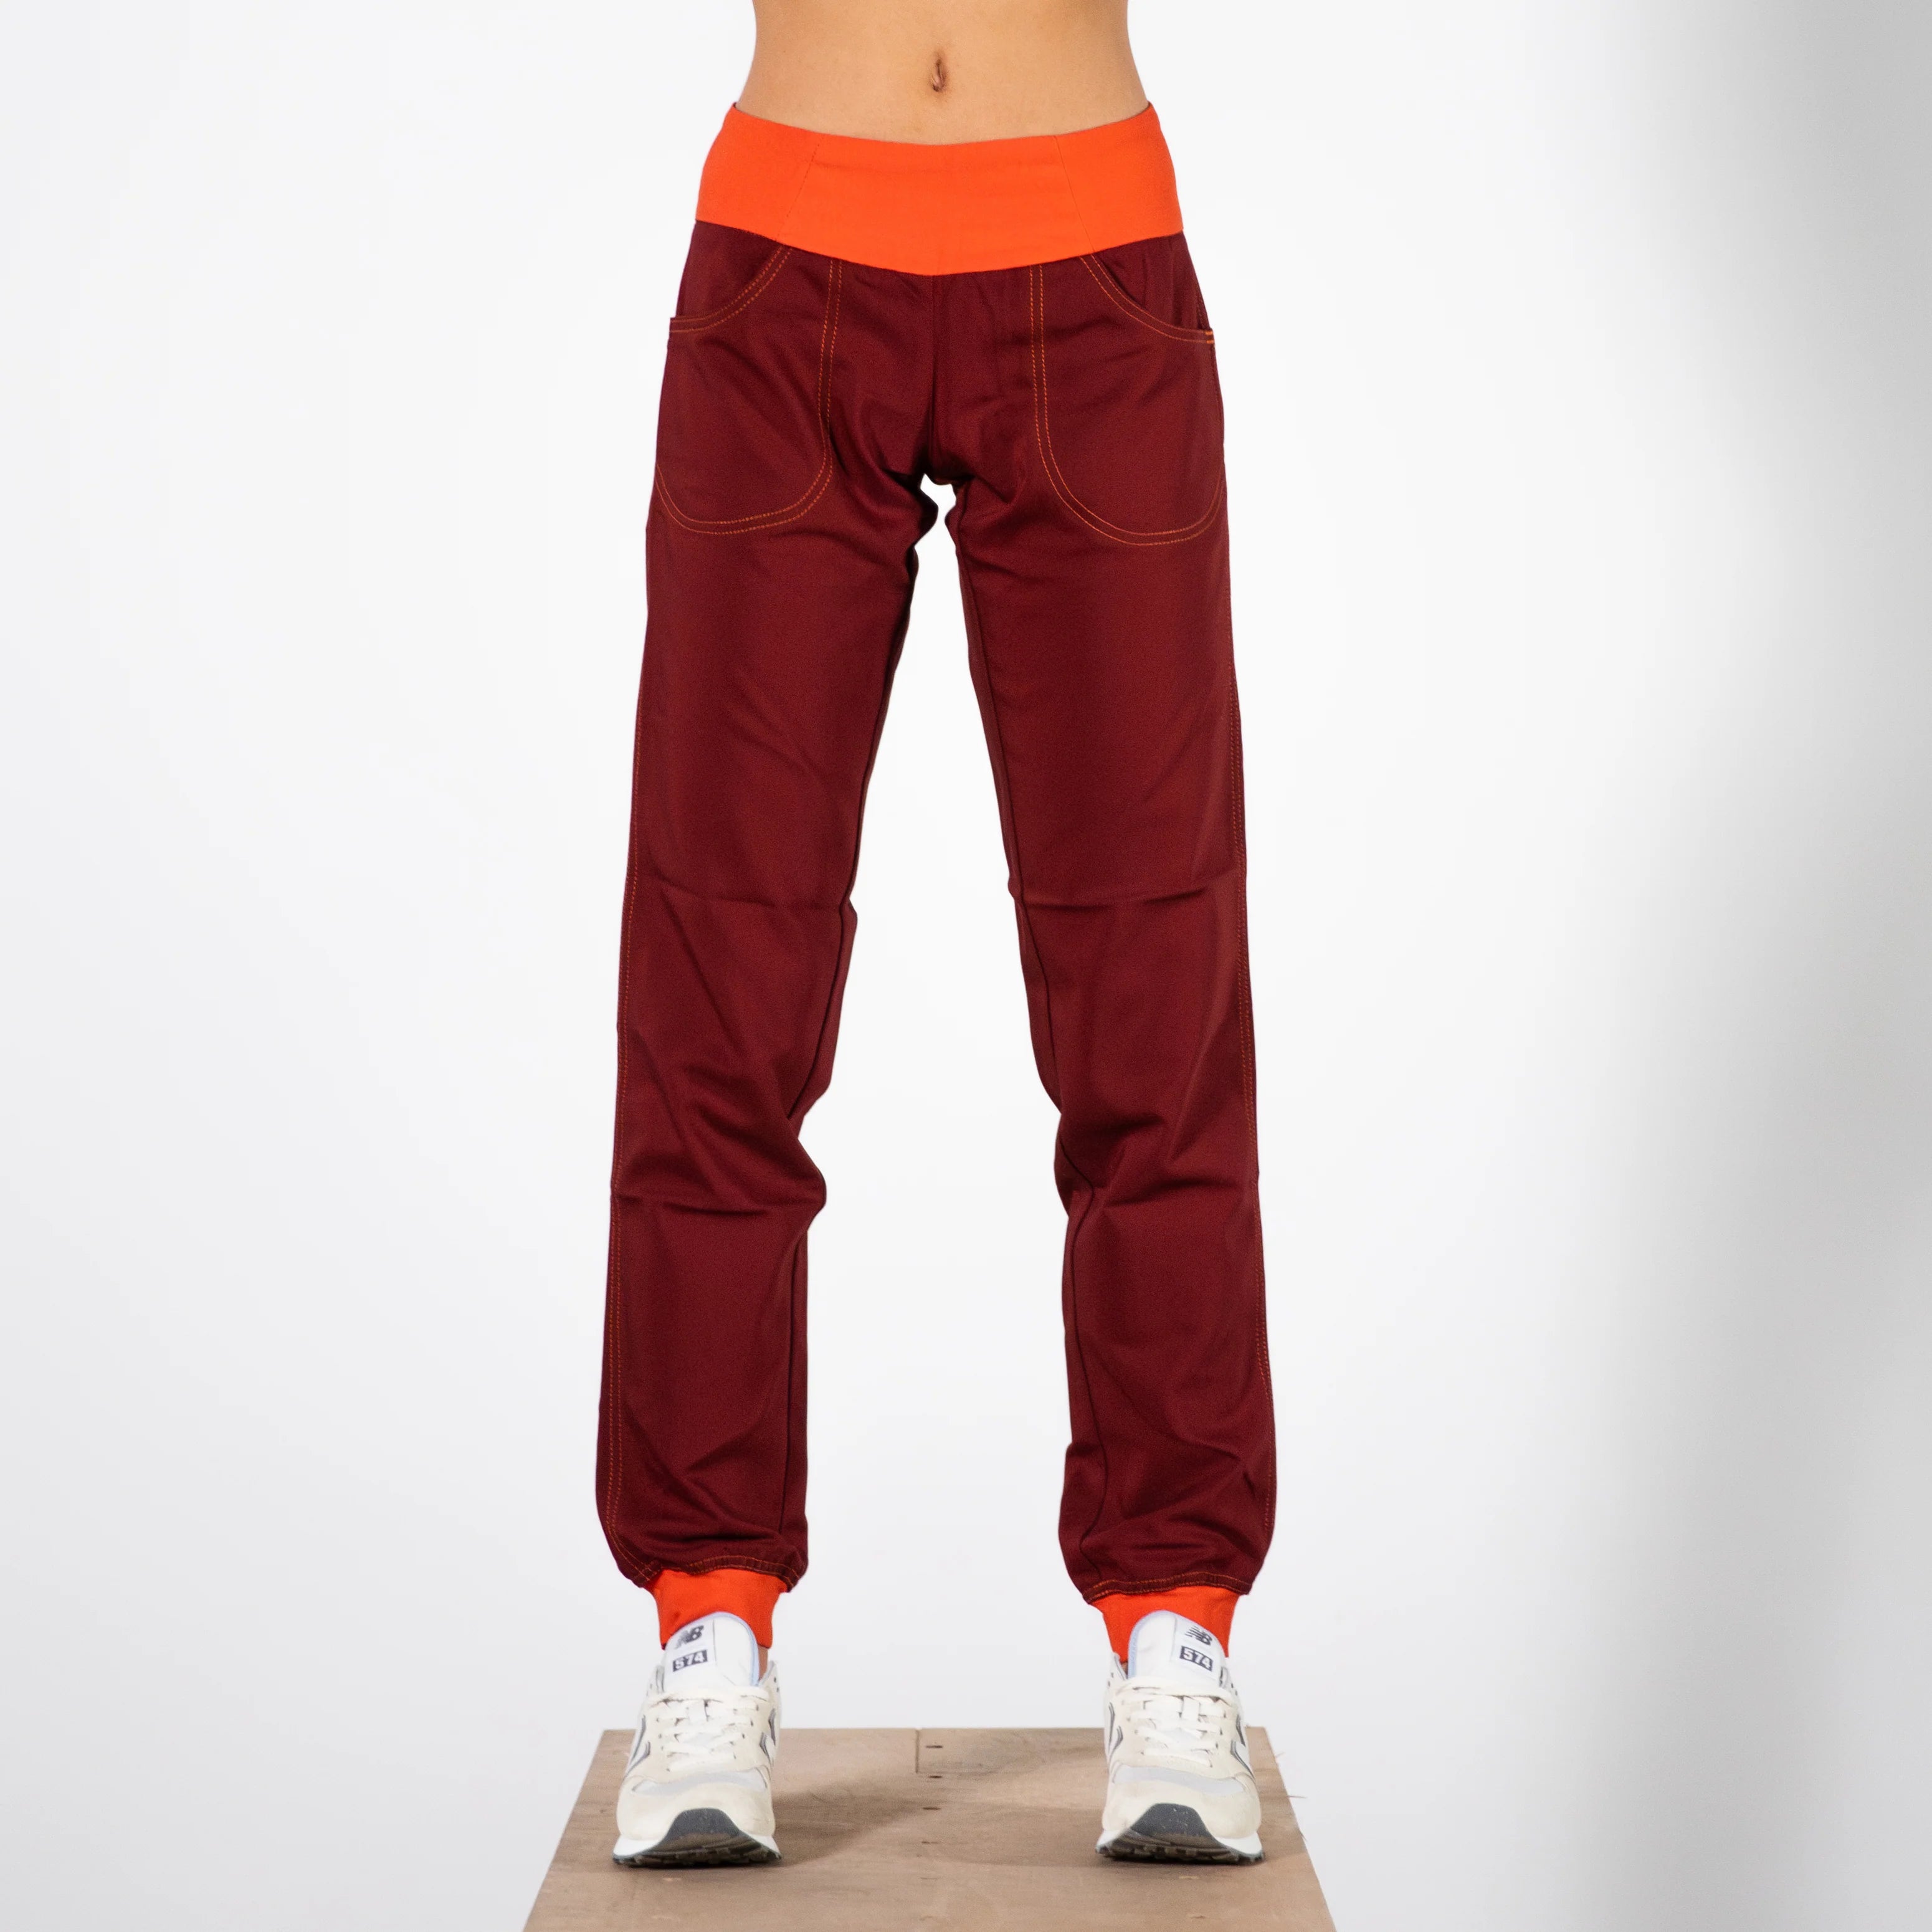 Red Chili Mitake Pants III - Climbing trousers - Women's